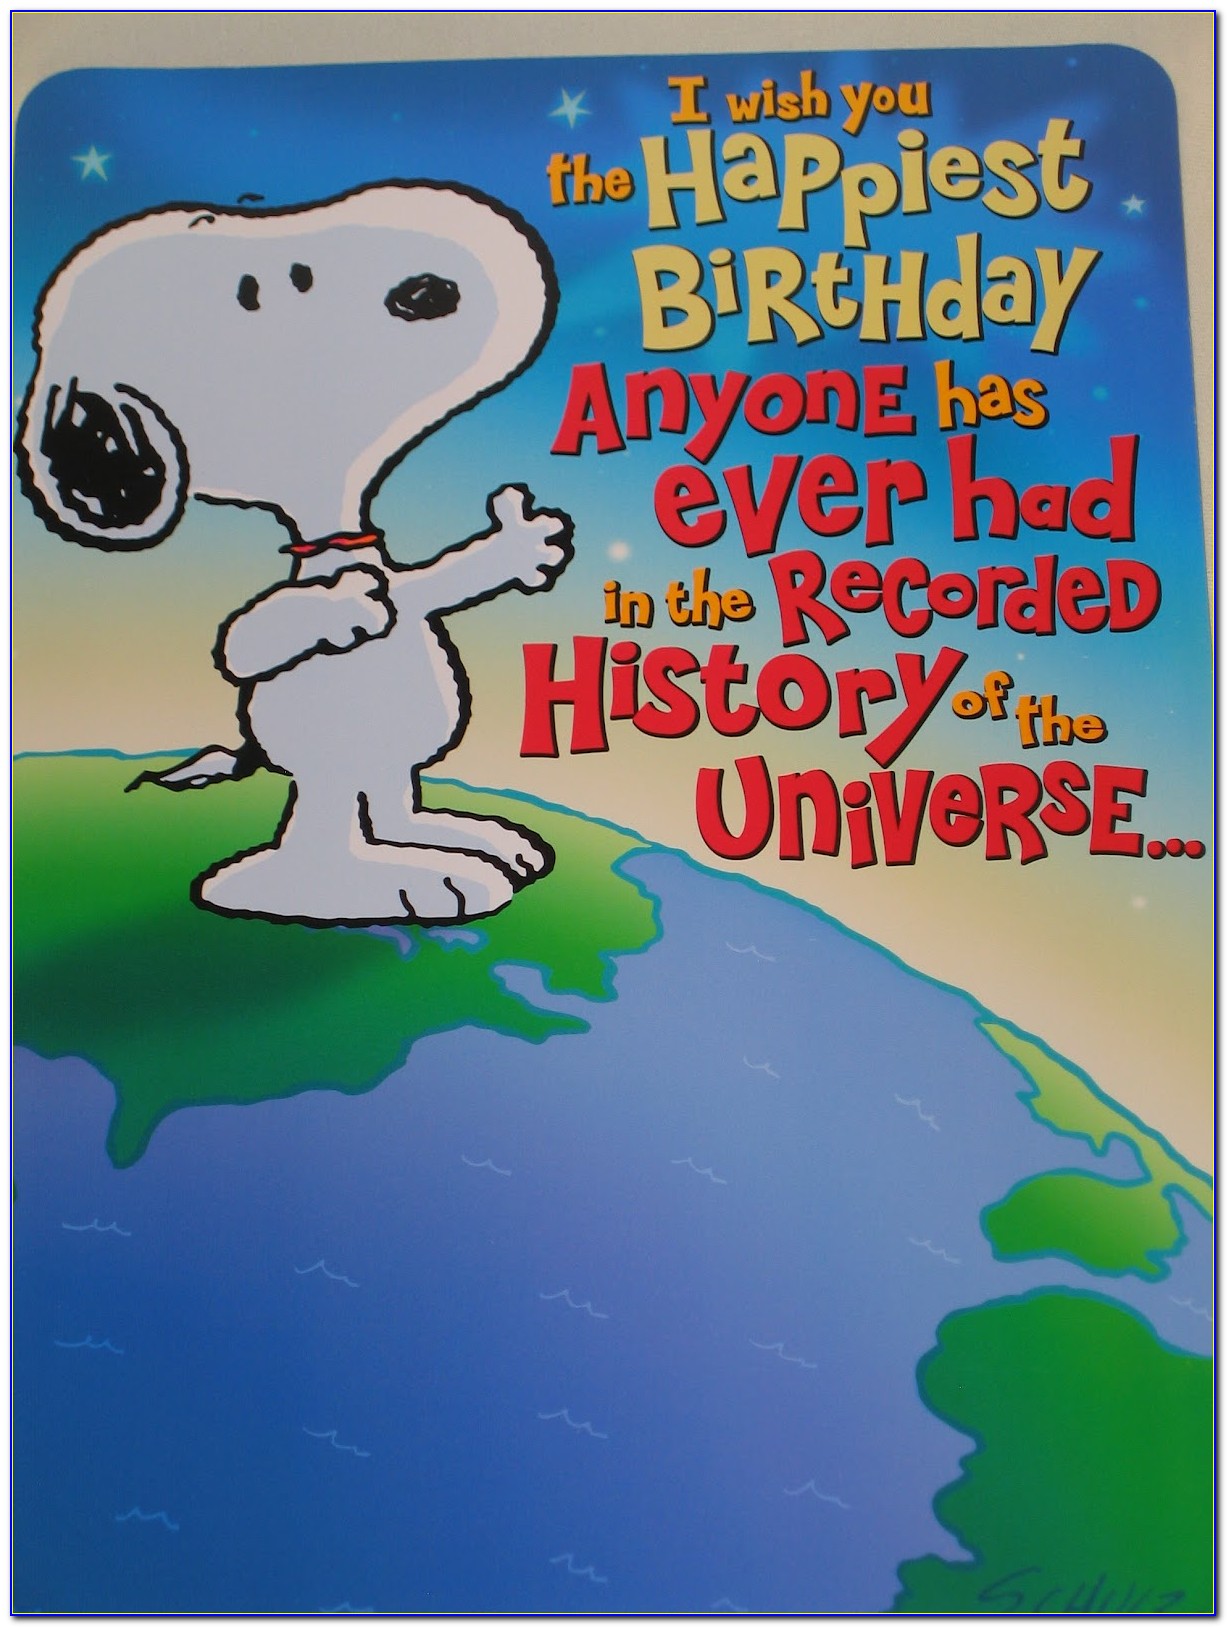 Snoopy Birthday Cards